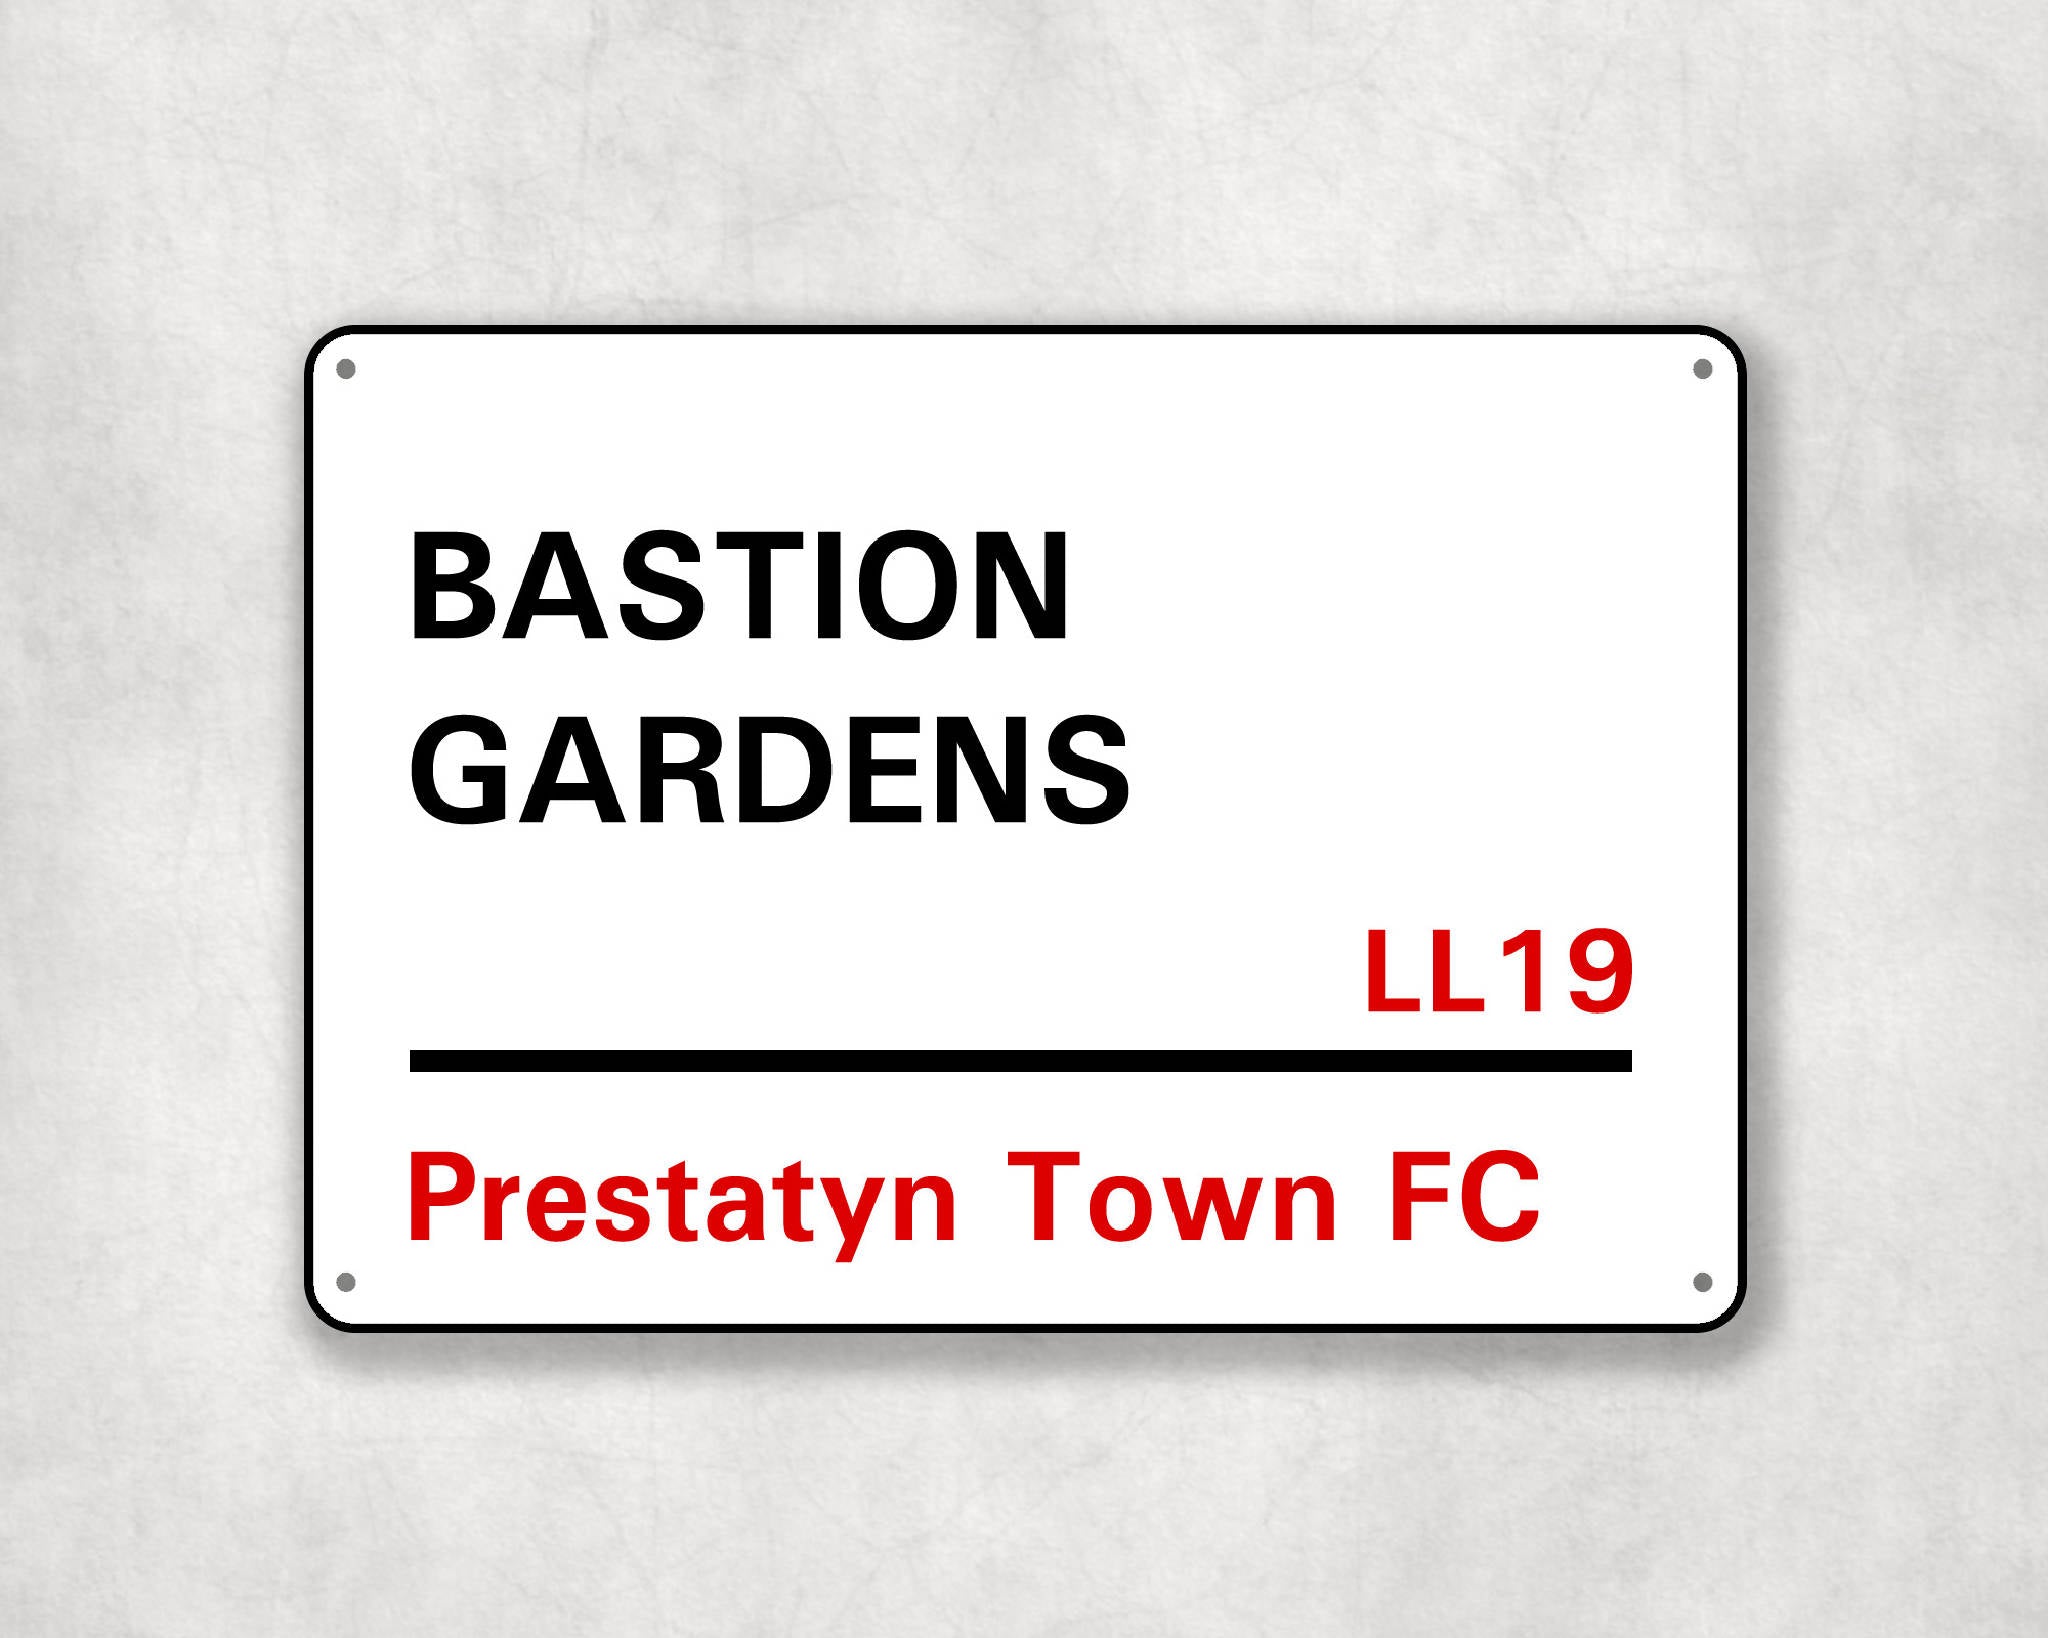 Bastion Gardens - Prestatyn Town FC aluminium printed metal street sign - gift, keepsake, football gift